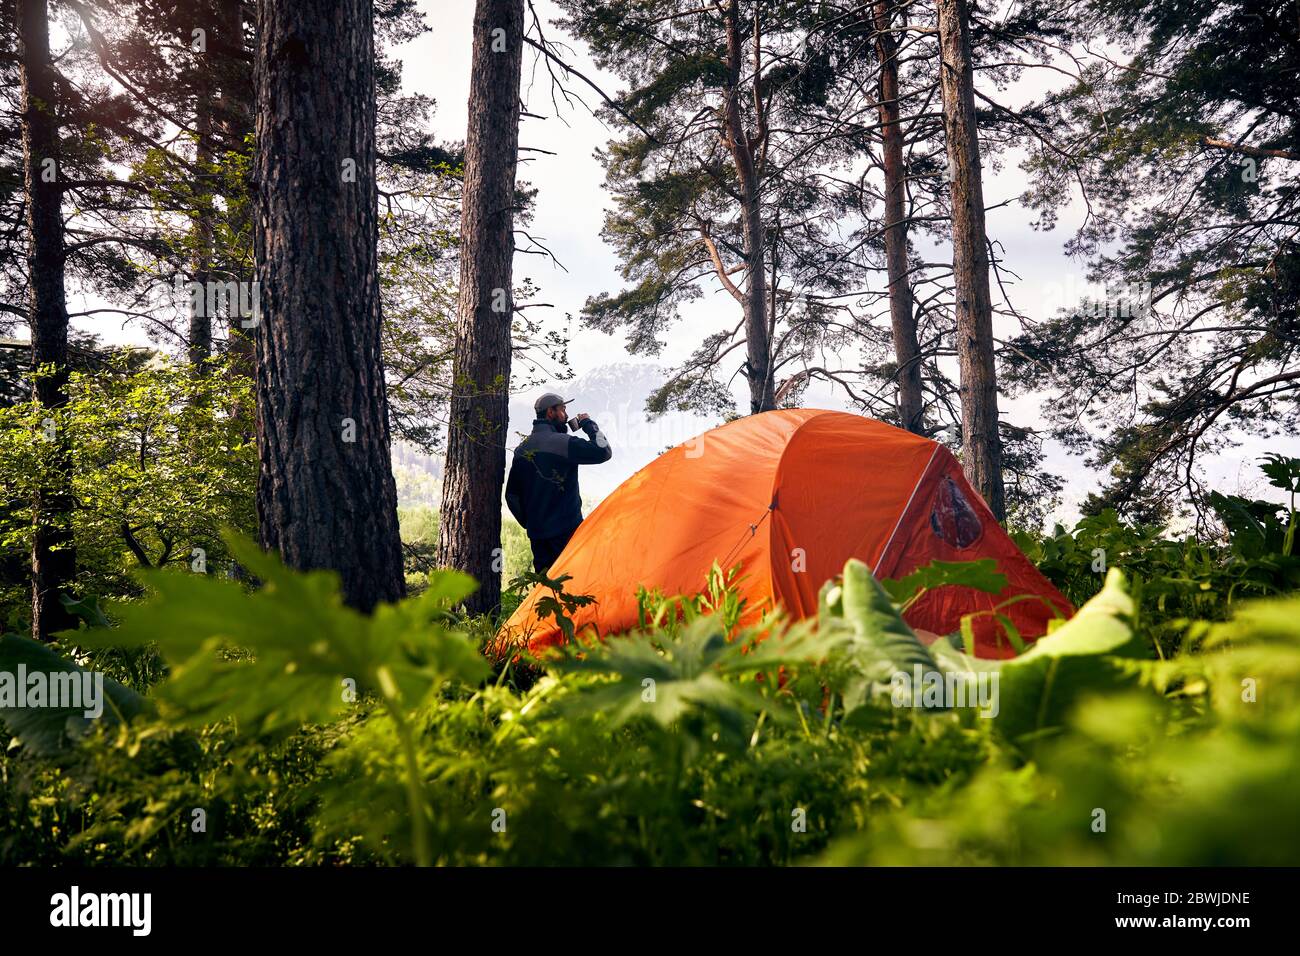 https://c8.alamy.com/comp/2BWJDNE/bearded-tourist-is-drinking-coffee-near-orange-tent-in-the-lush-forest-at-mountains-2BWJDNE.jpg